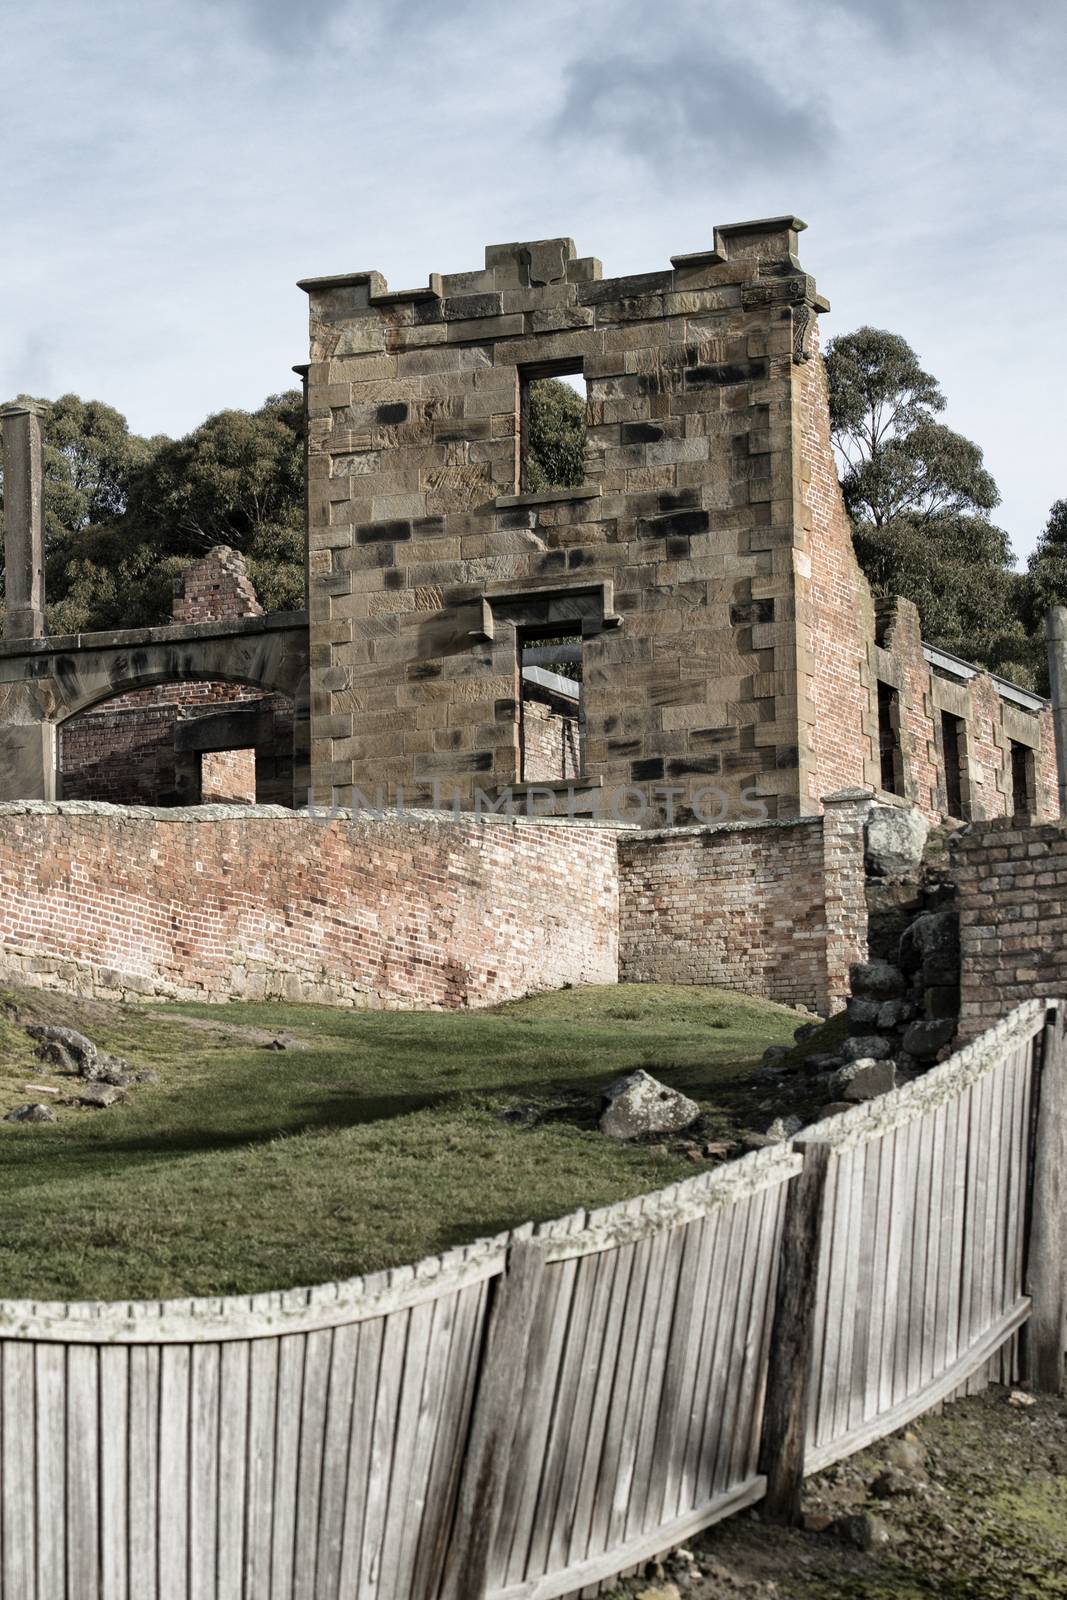 Port Arthur the old convict colony and historic jail located in Tasmania, Australia